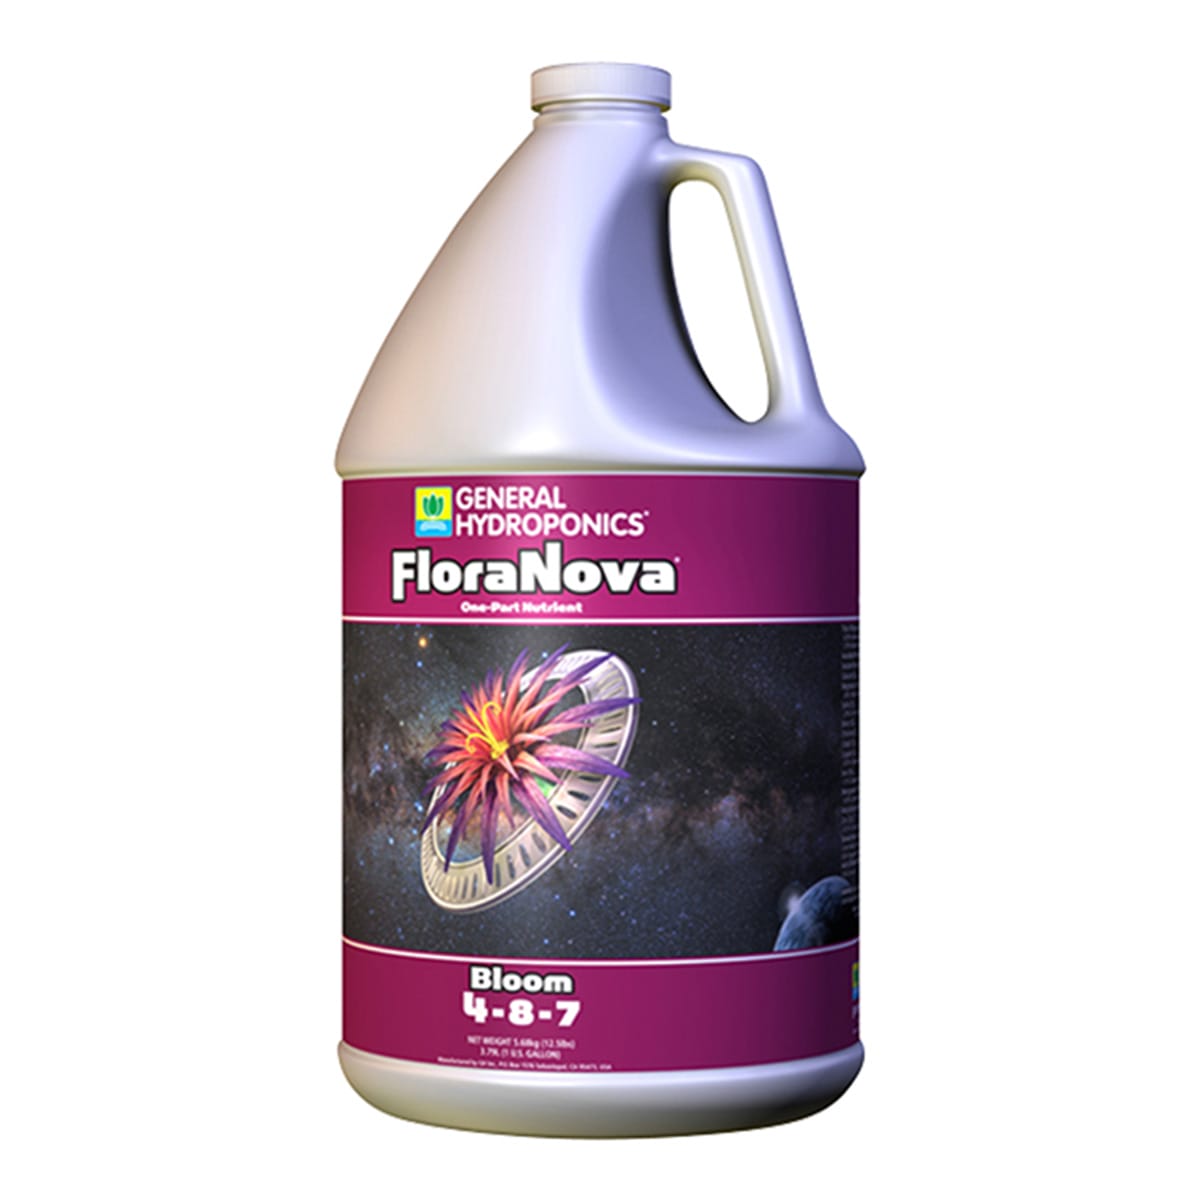 FloraNova Bloom Gallon